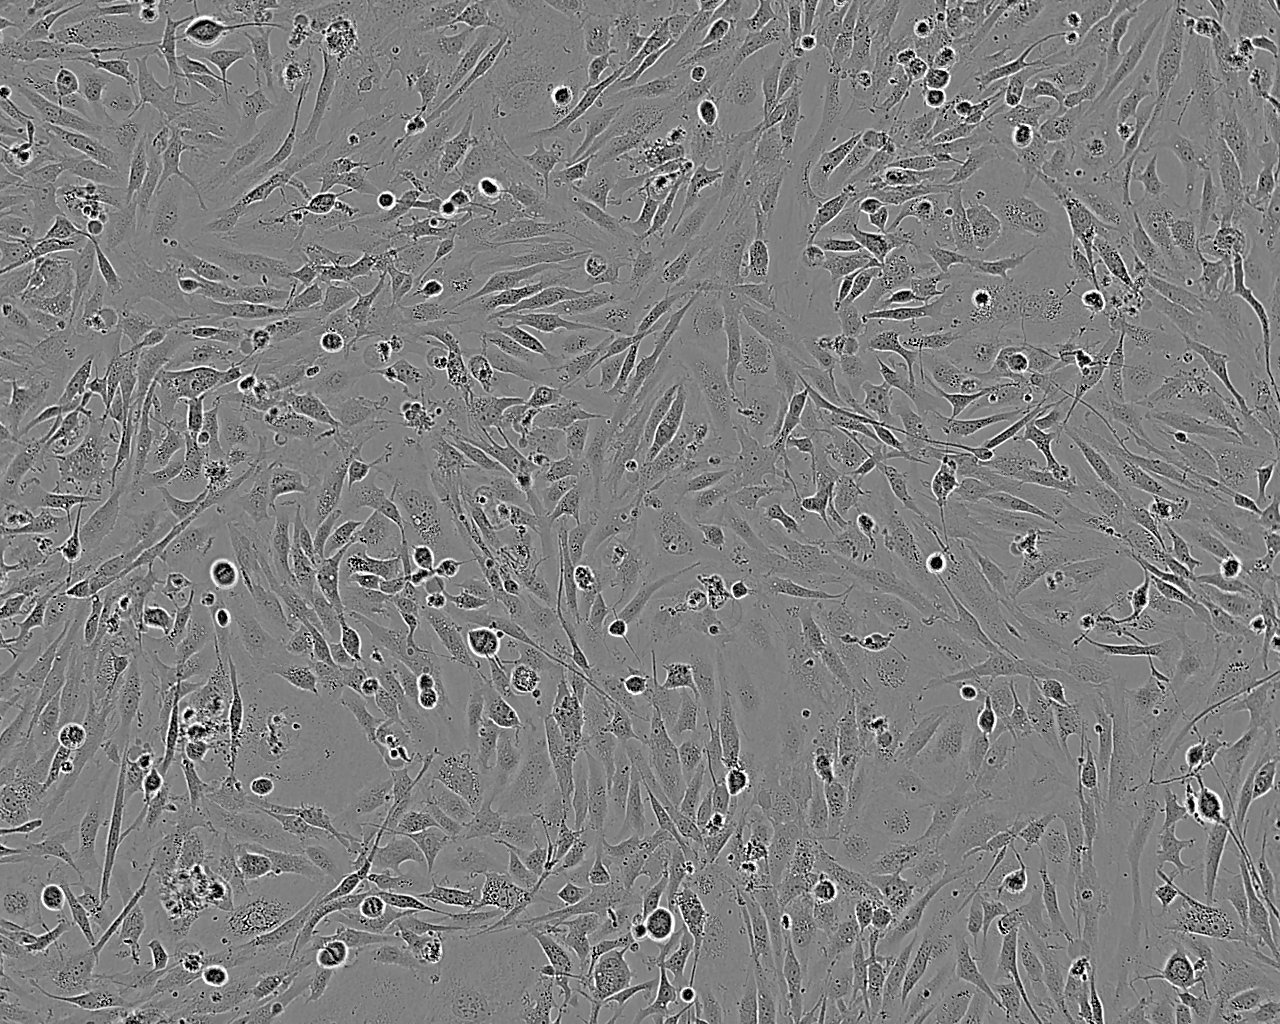 NCI-ADR-RES epithelioid cells卵巢腺癌细胞系,NCI-ADR-RES epithelioid cells